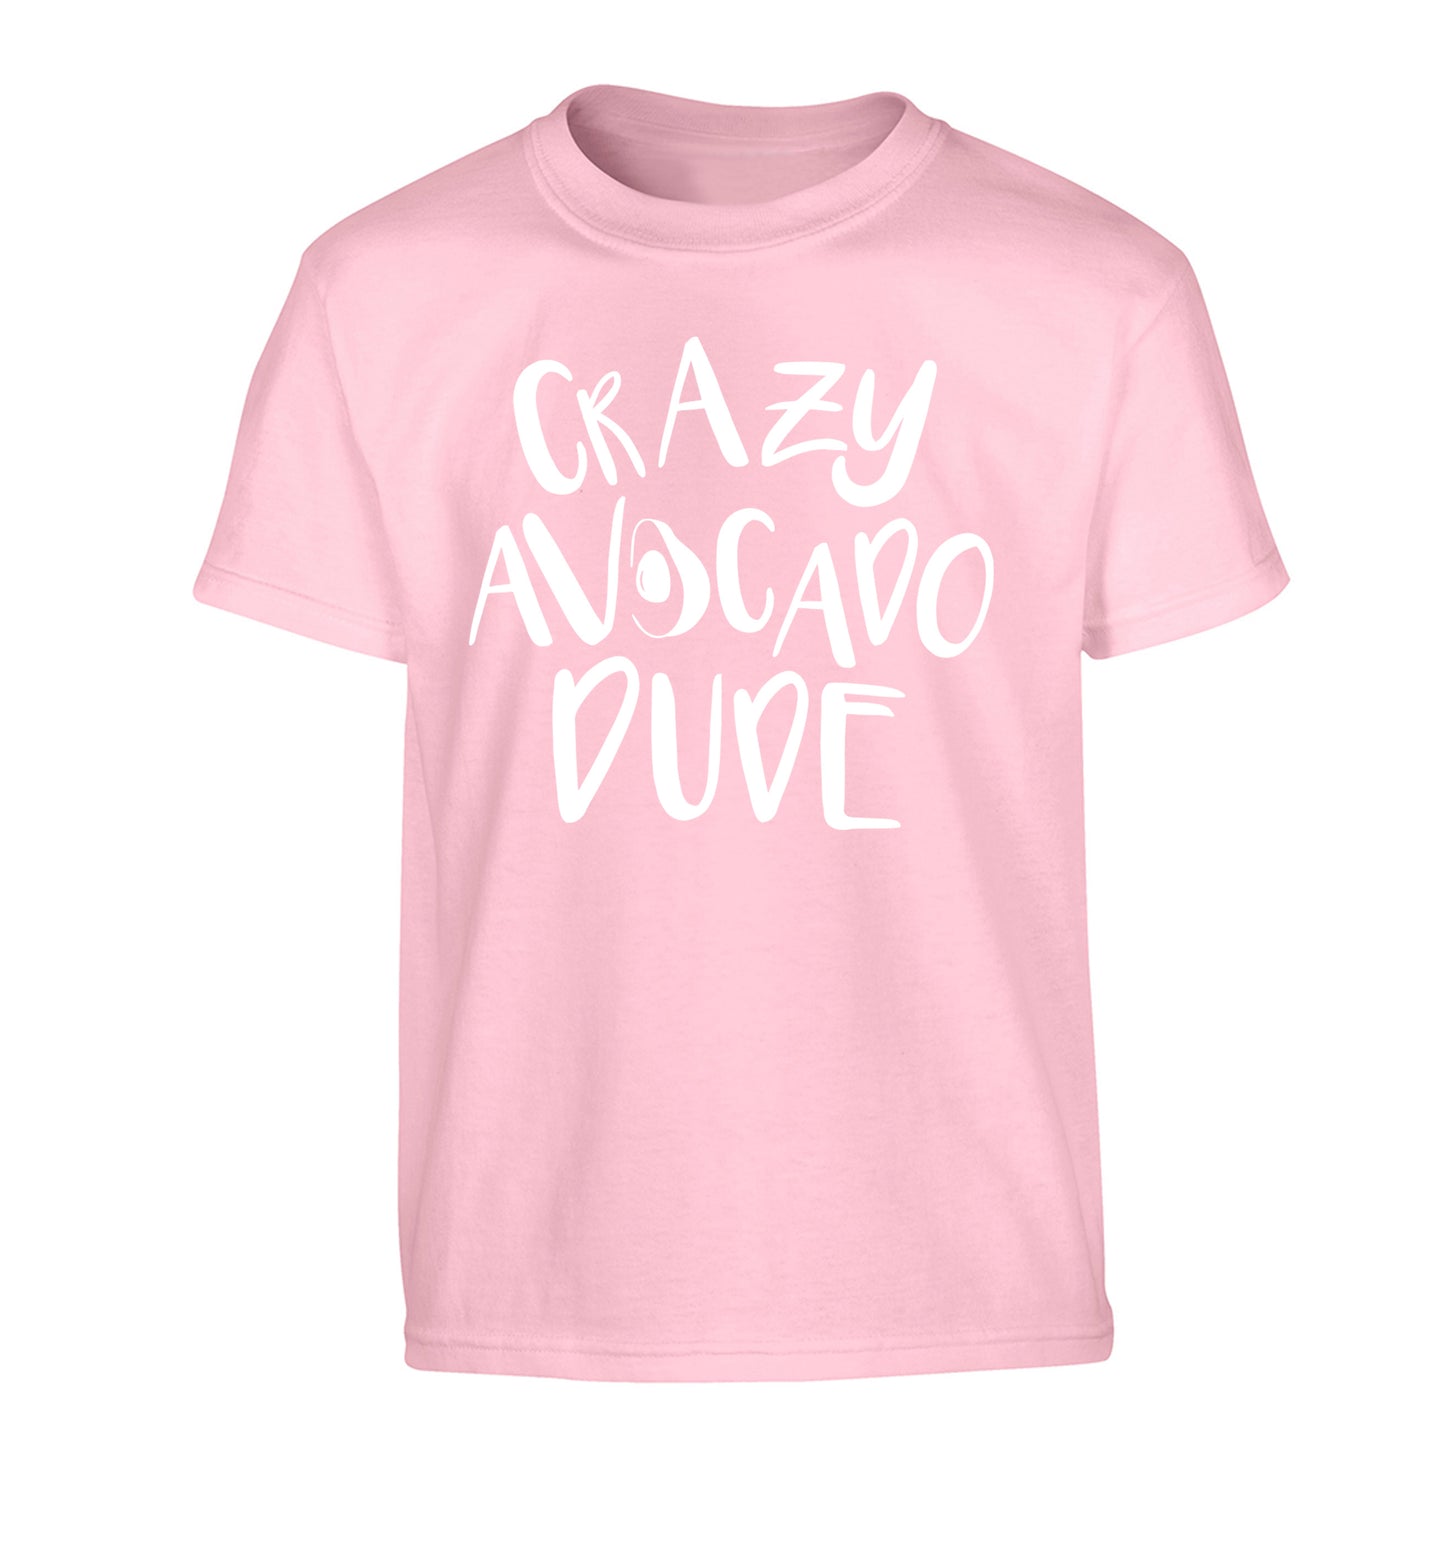 Crazy avocado dude Children's light pink Tshirt 12-14 Years